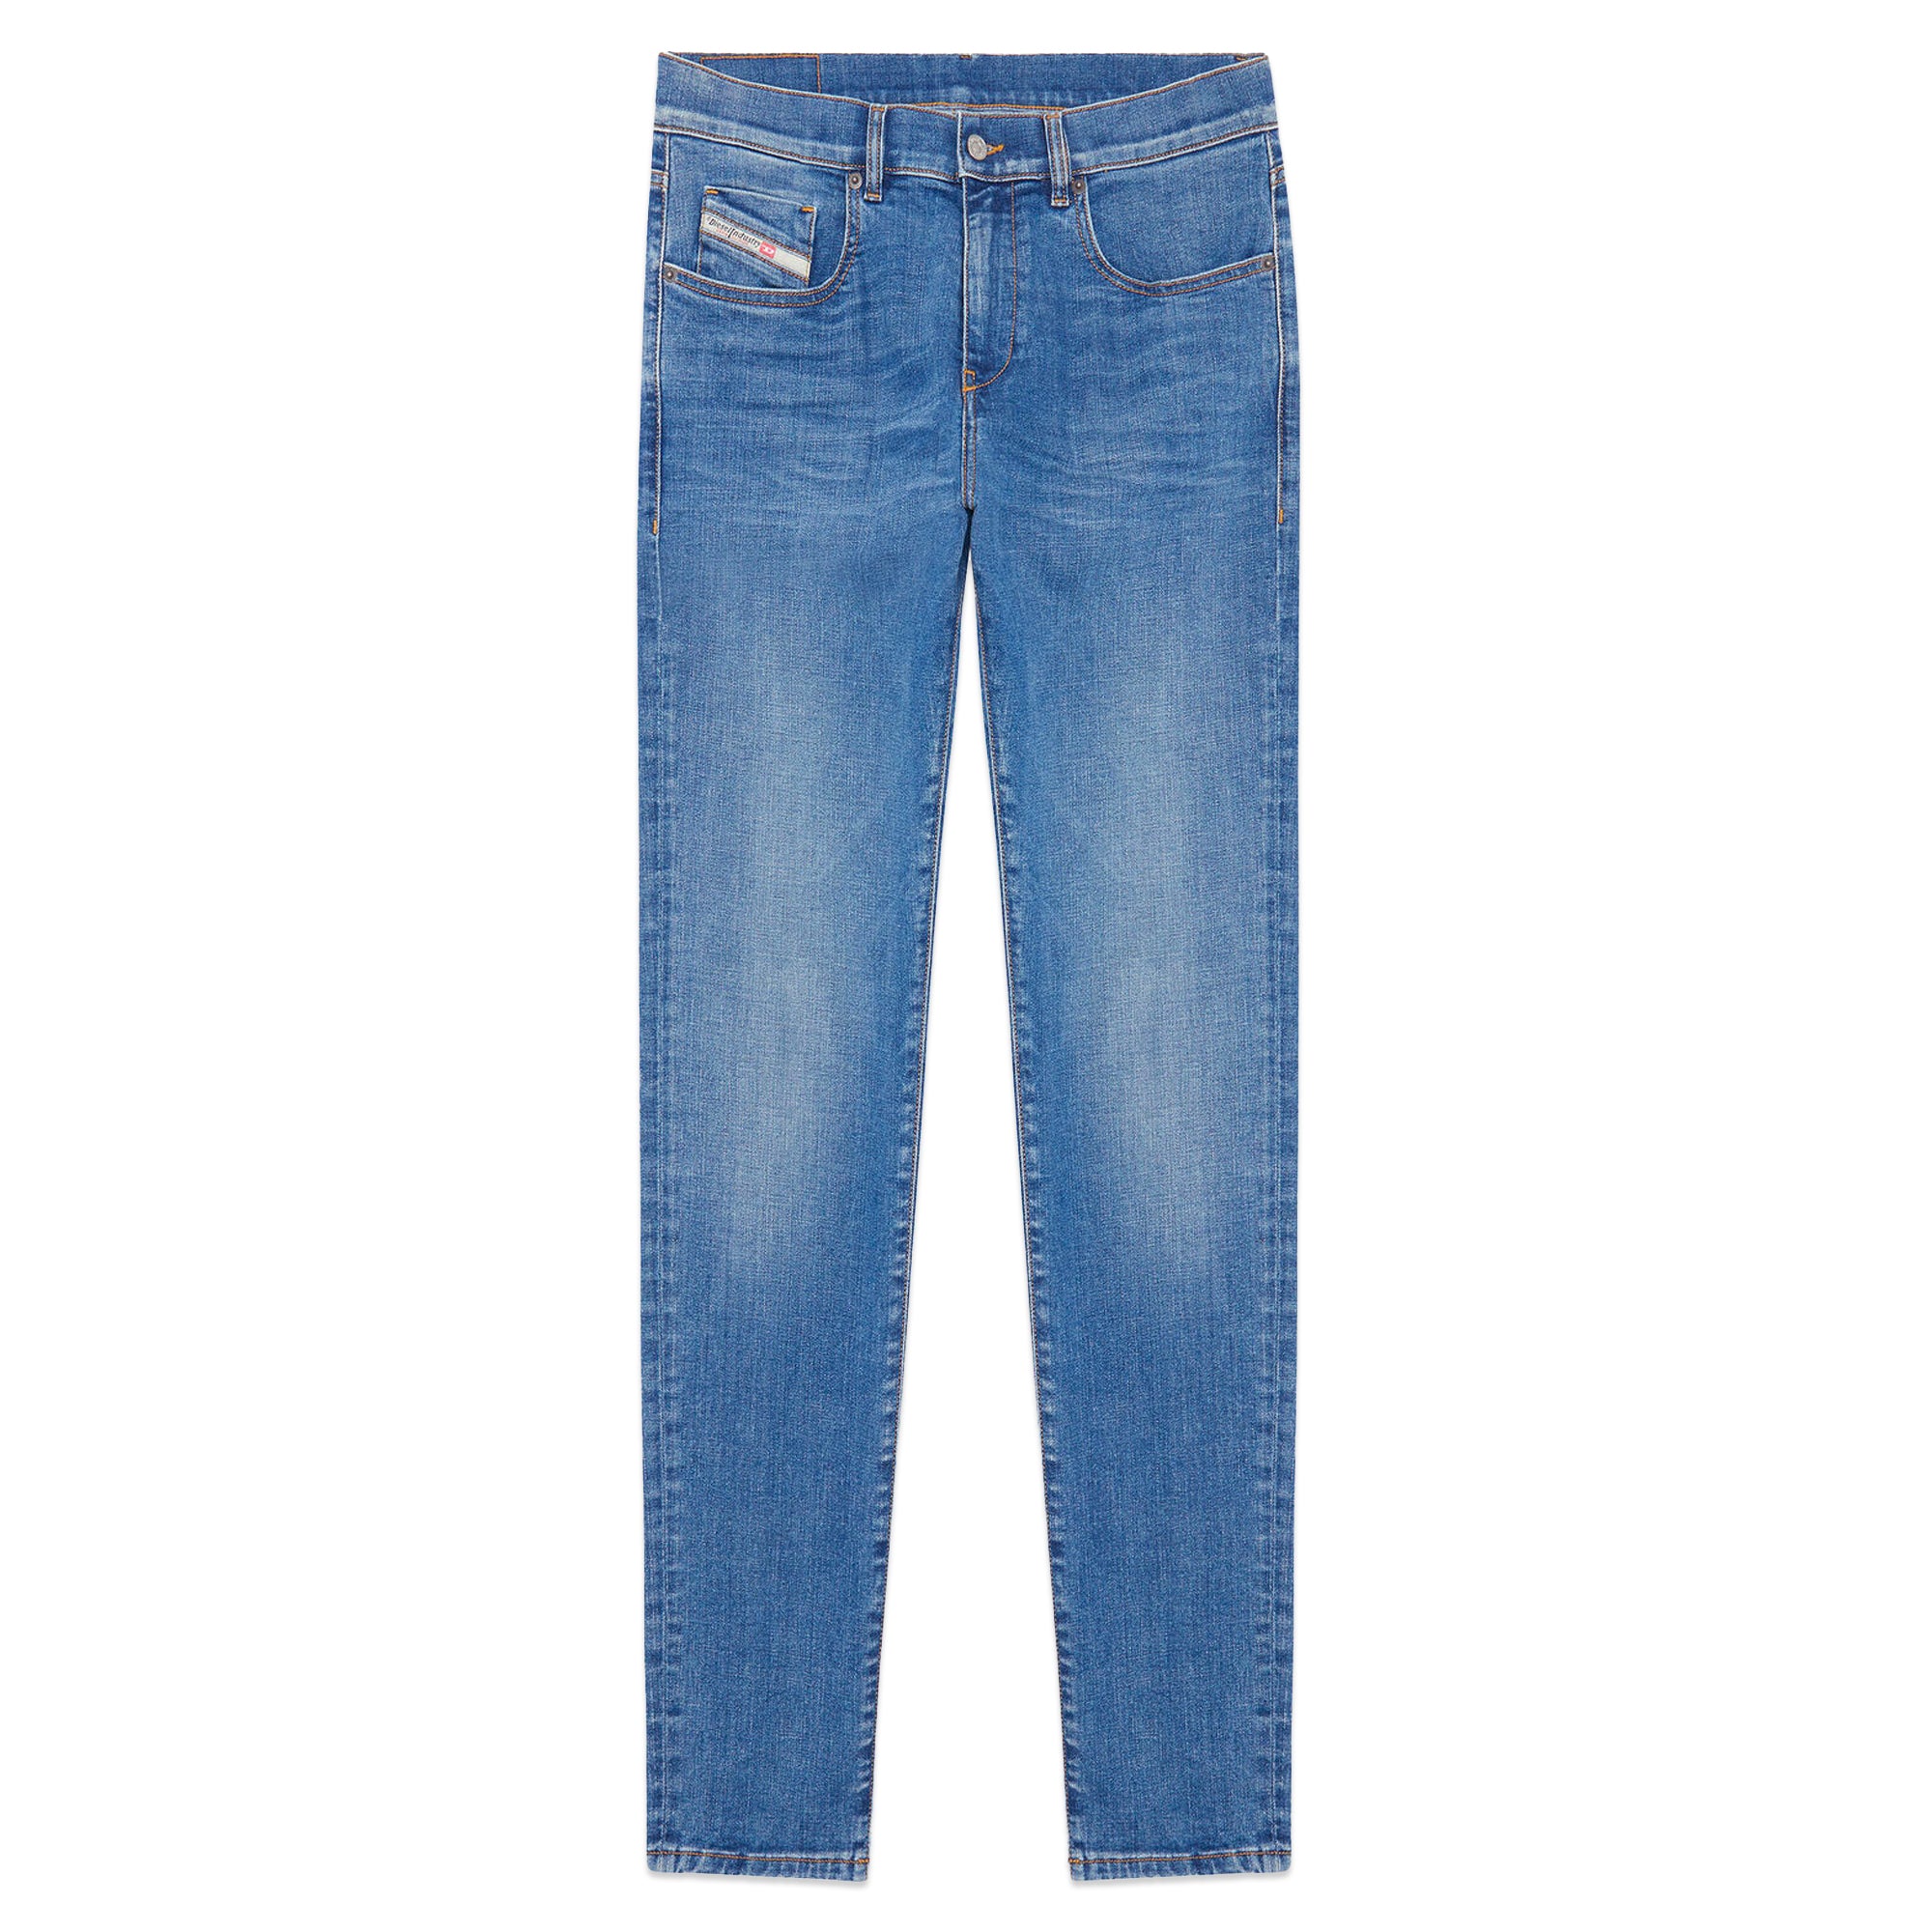 Diesel D-Strukt 09D47 Slim Fit Jeans - Medium Blue